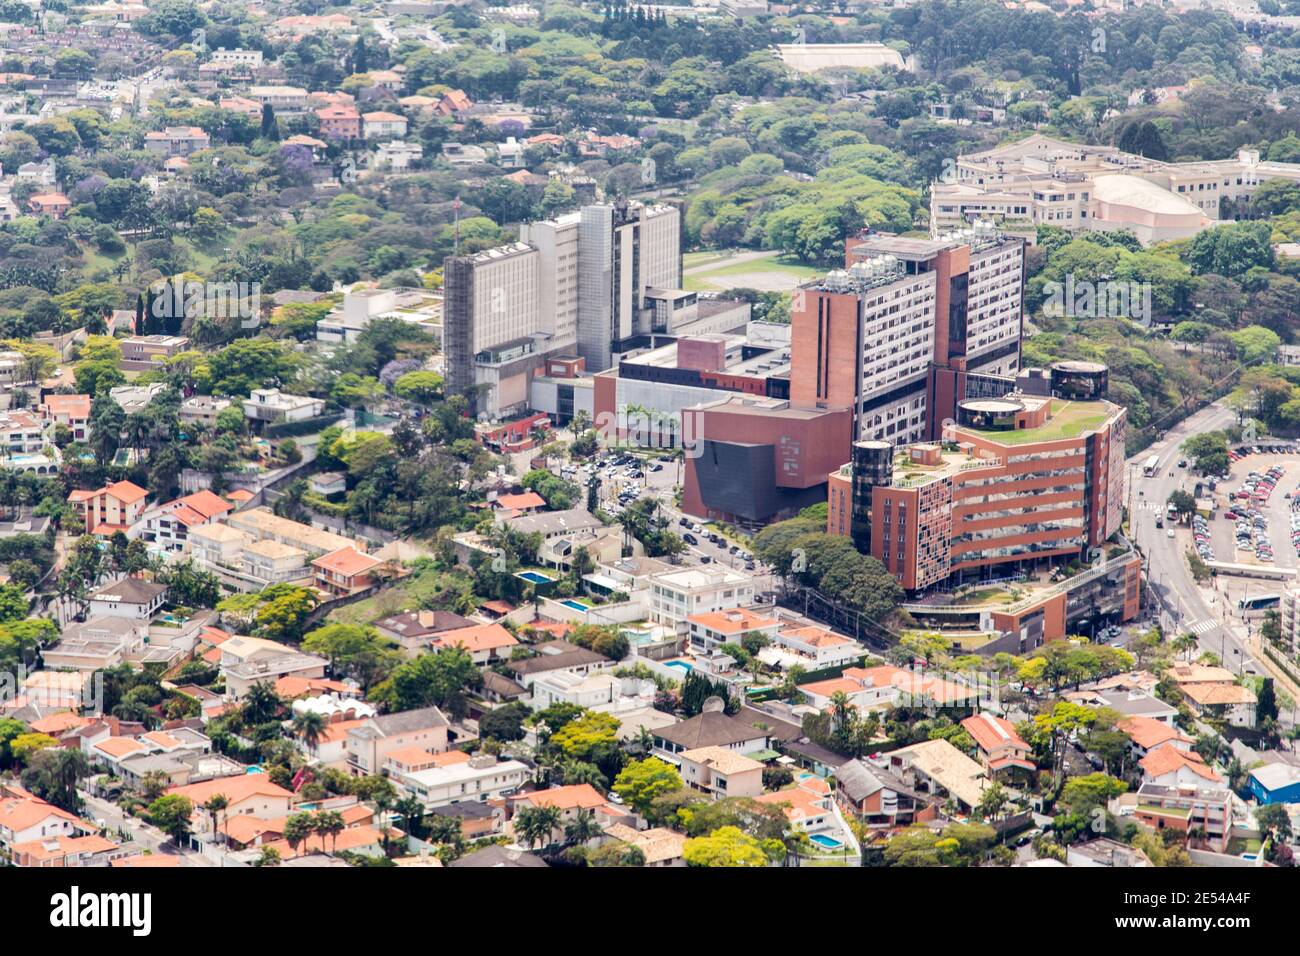 Vue aérienne Hôpital Albert Einstein à Sao Paulo - Brésil bairro do Morumbi Banque D'Images